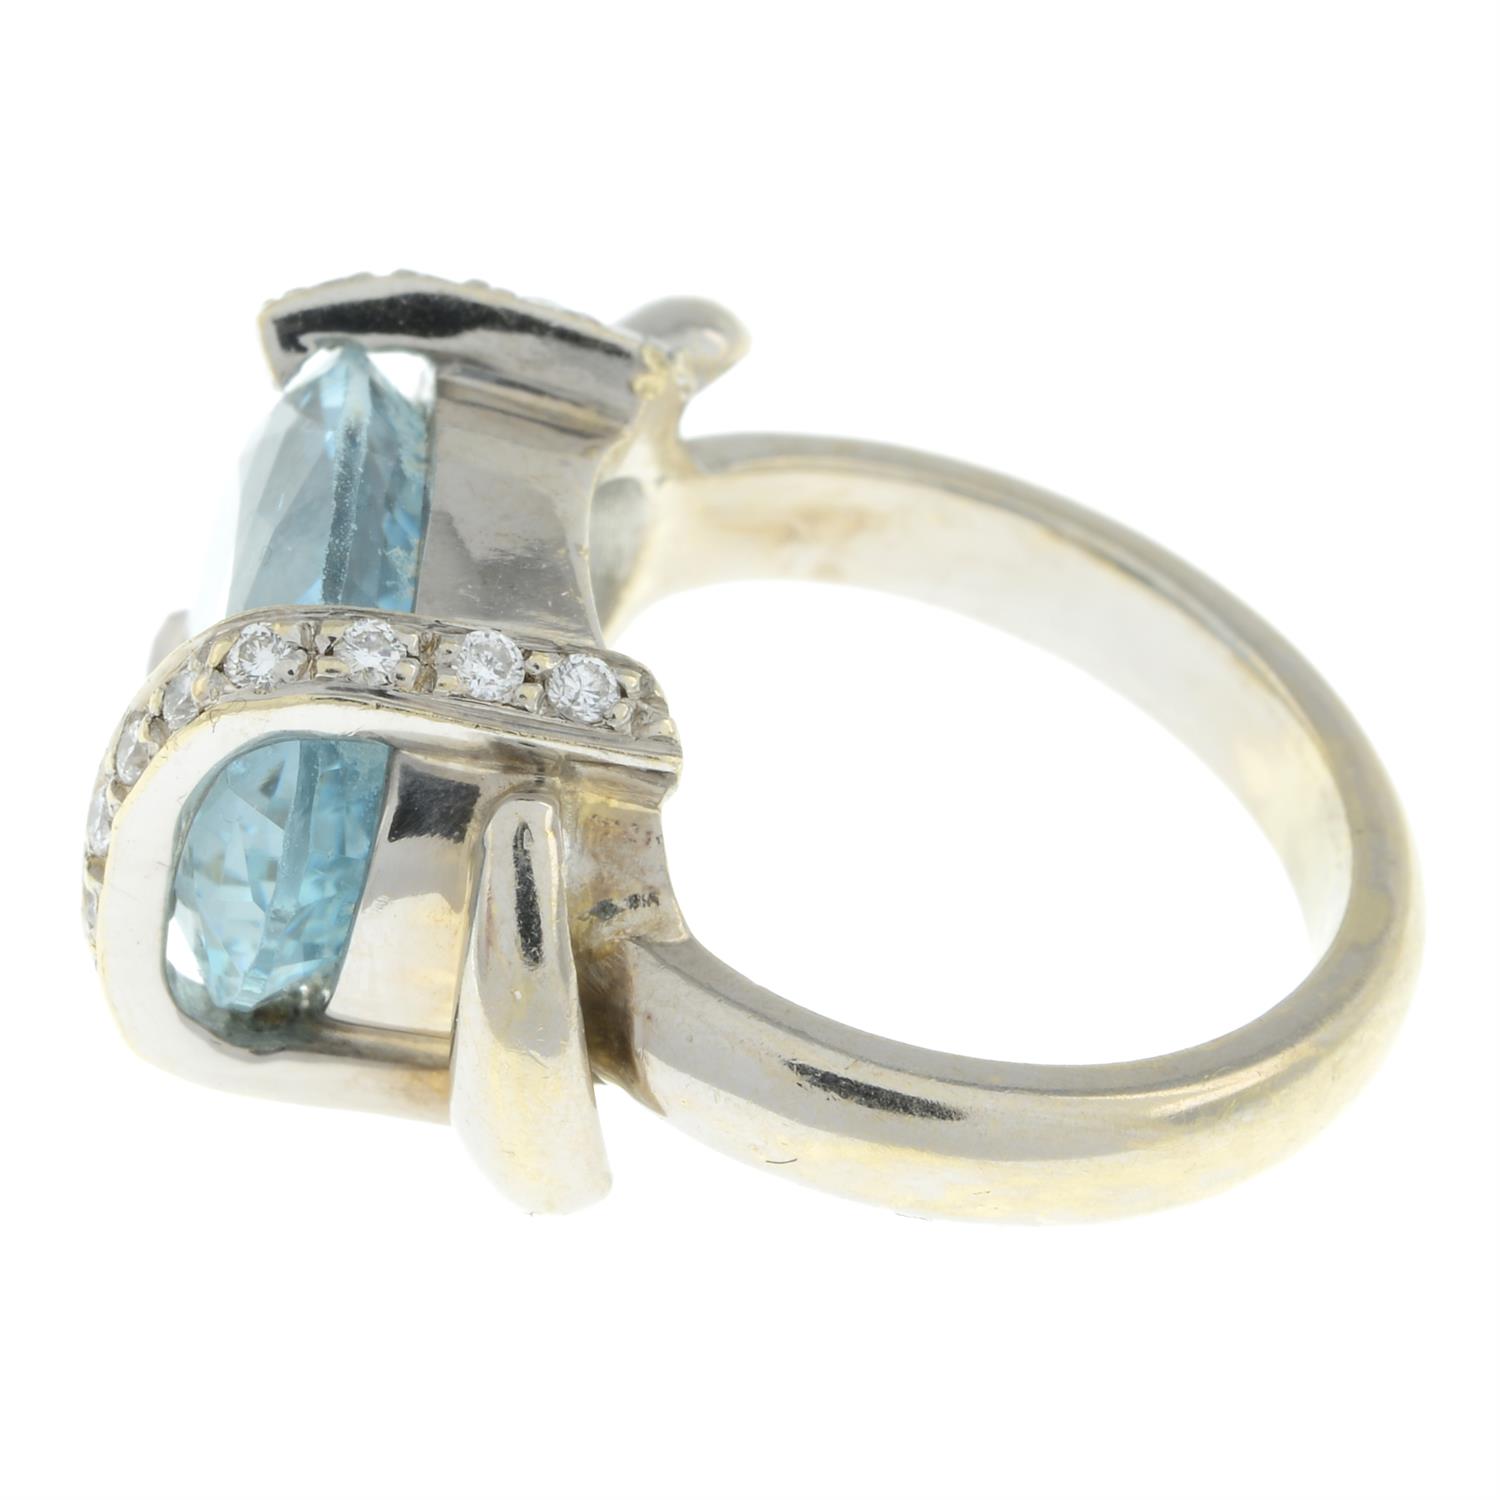 Aquamarine and diamond dress ring - Image 4 of 5